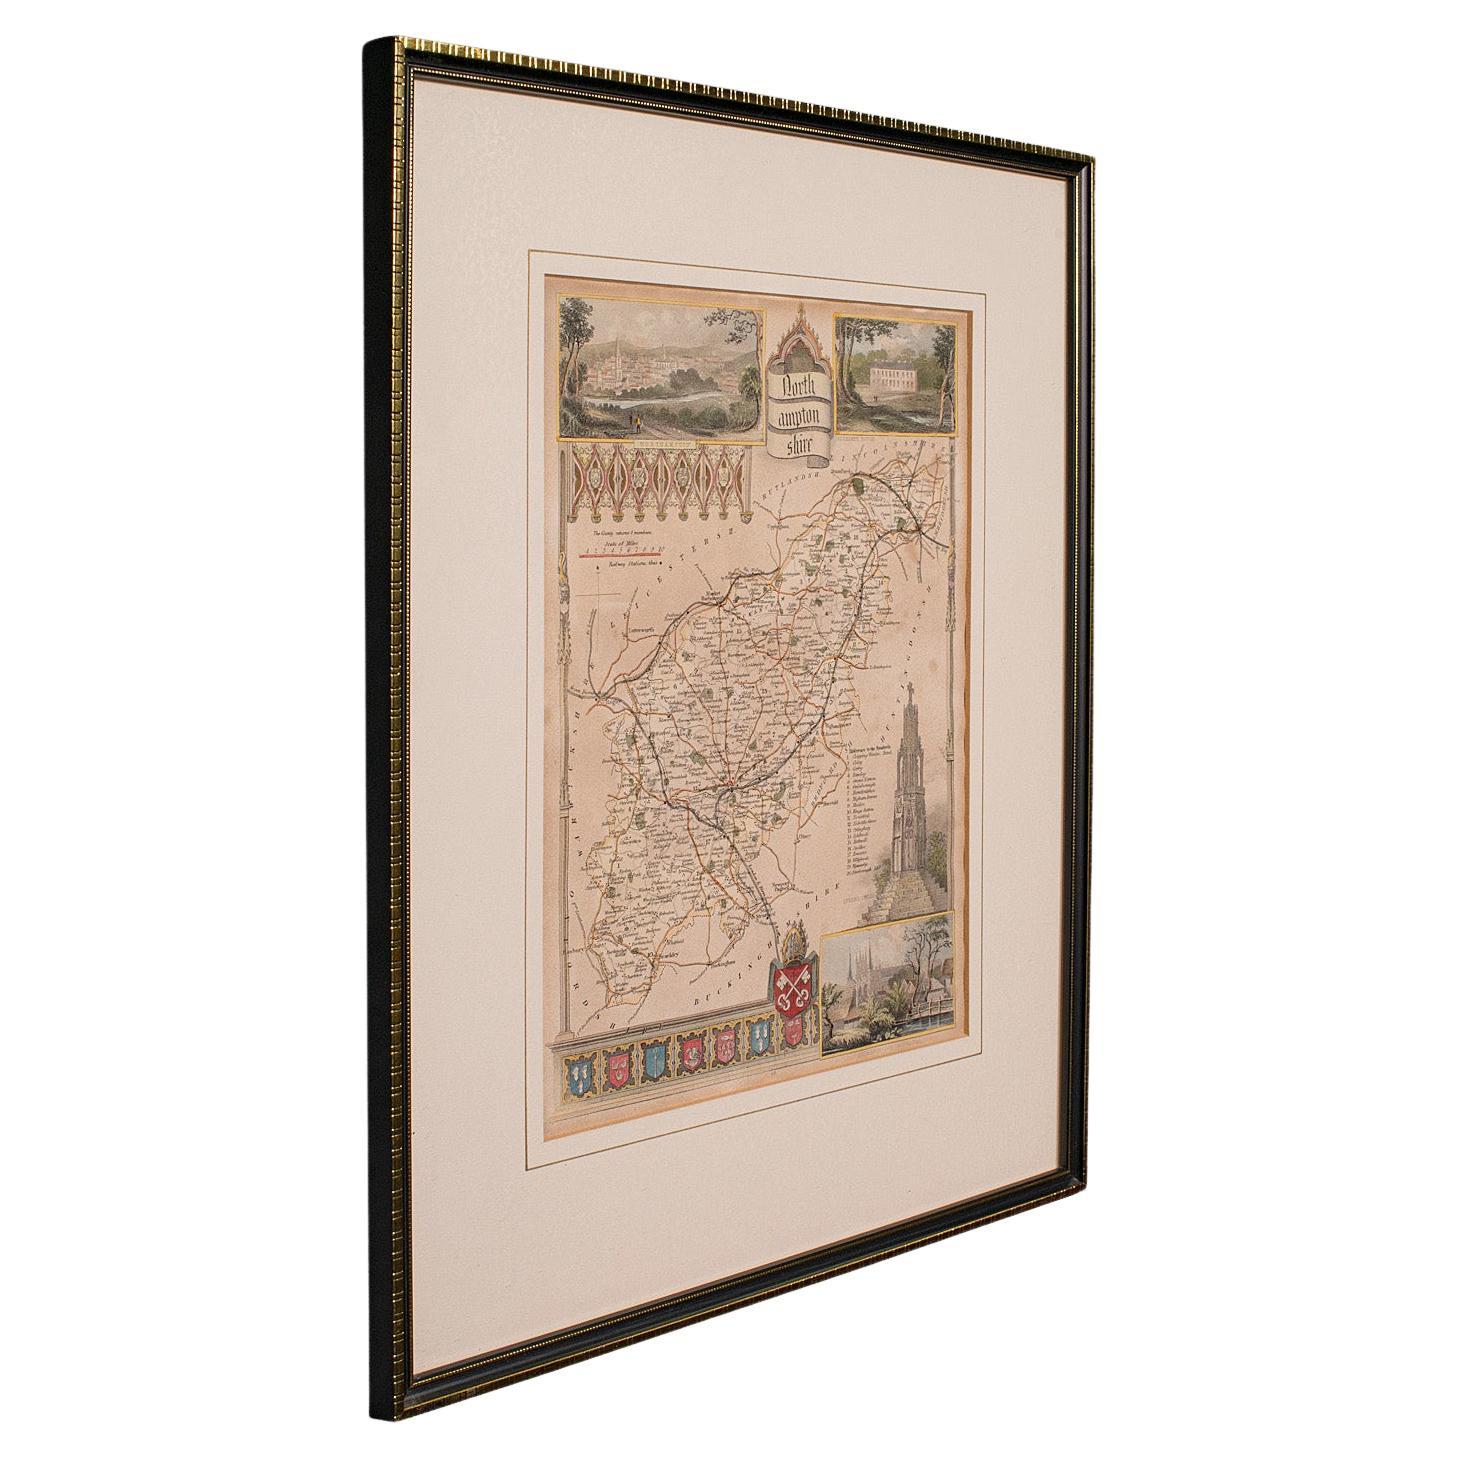 Carte lithographie ancienne, Hertfordshire, anglaise, gravure encadrée, cartographie